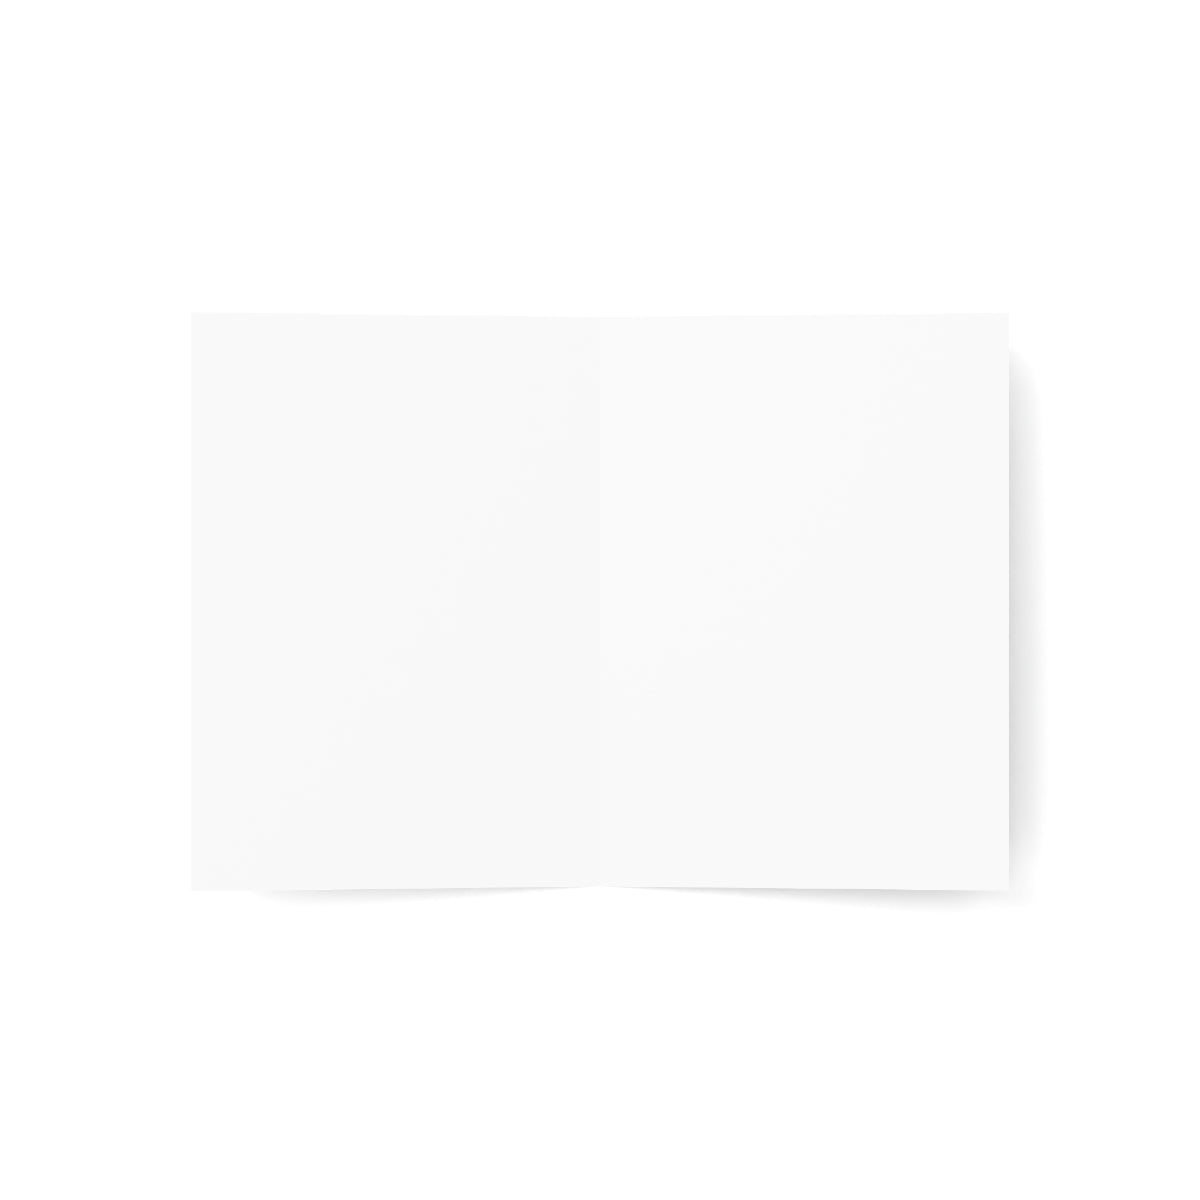 Denali National Park Folded Matte Notecards + Envelopes (10pcs)